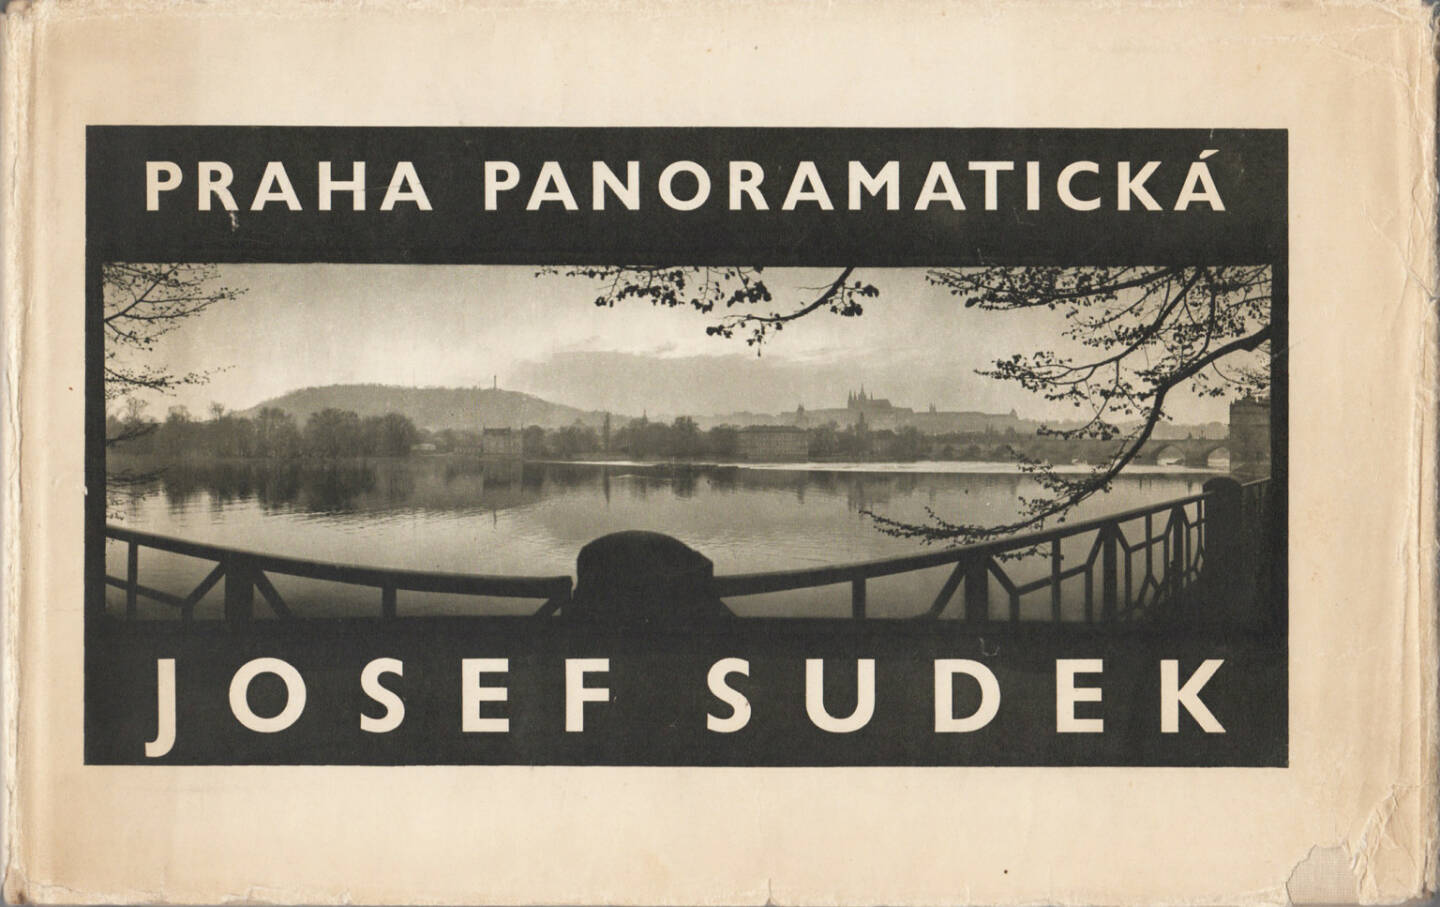 Josef Sudek - Praha Panoramatická (Prag), Statni Nakladatelstvi 1959, Cover - http://josefchladek.com/book/josef_sudek_-_praha_panoramaticka